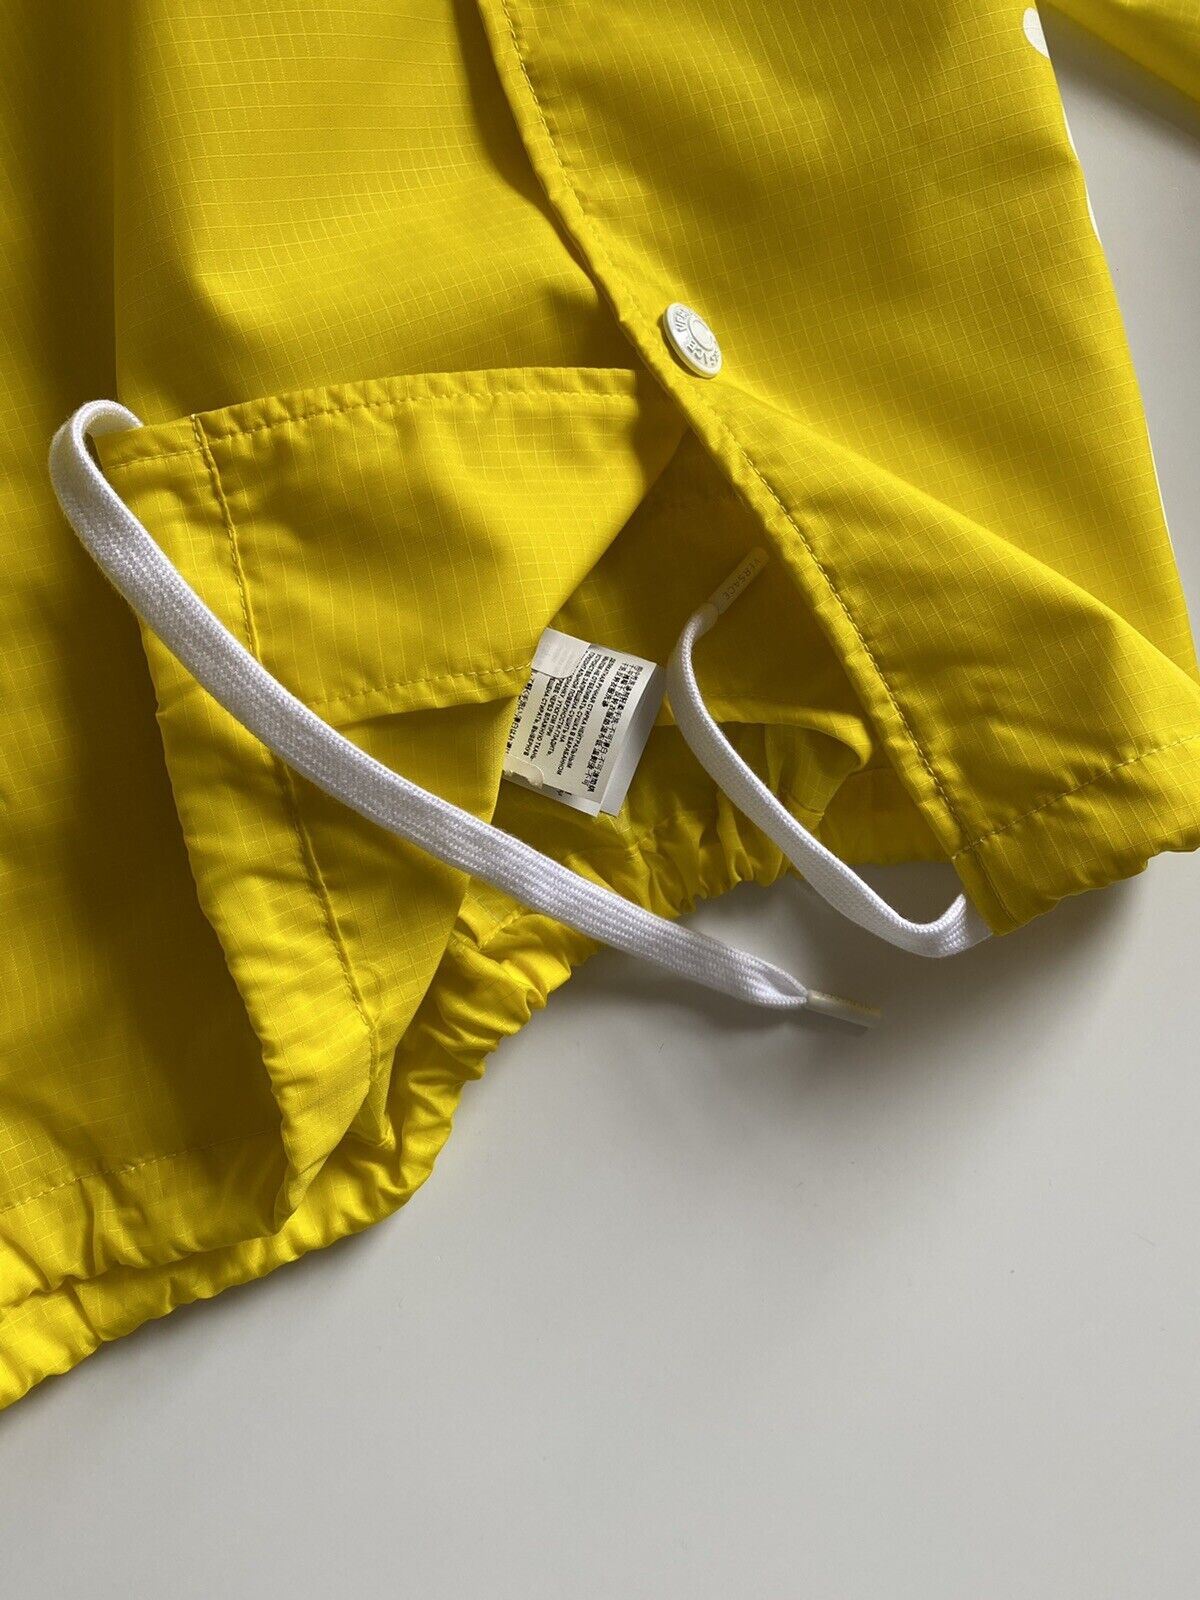 Мужской желтый плащ на пуговицах Versace NWT $1150 S (46 евро) A85203 IT 